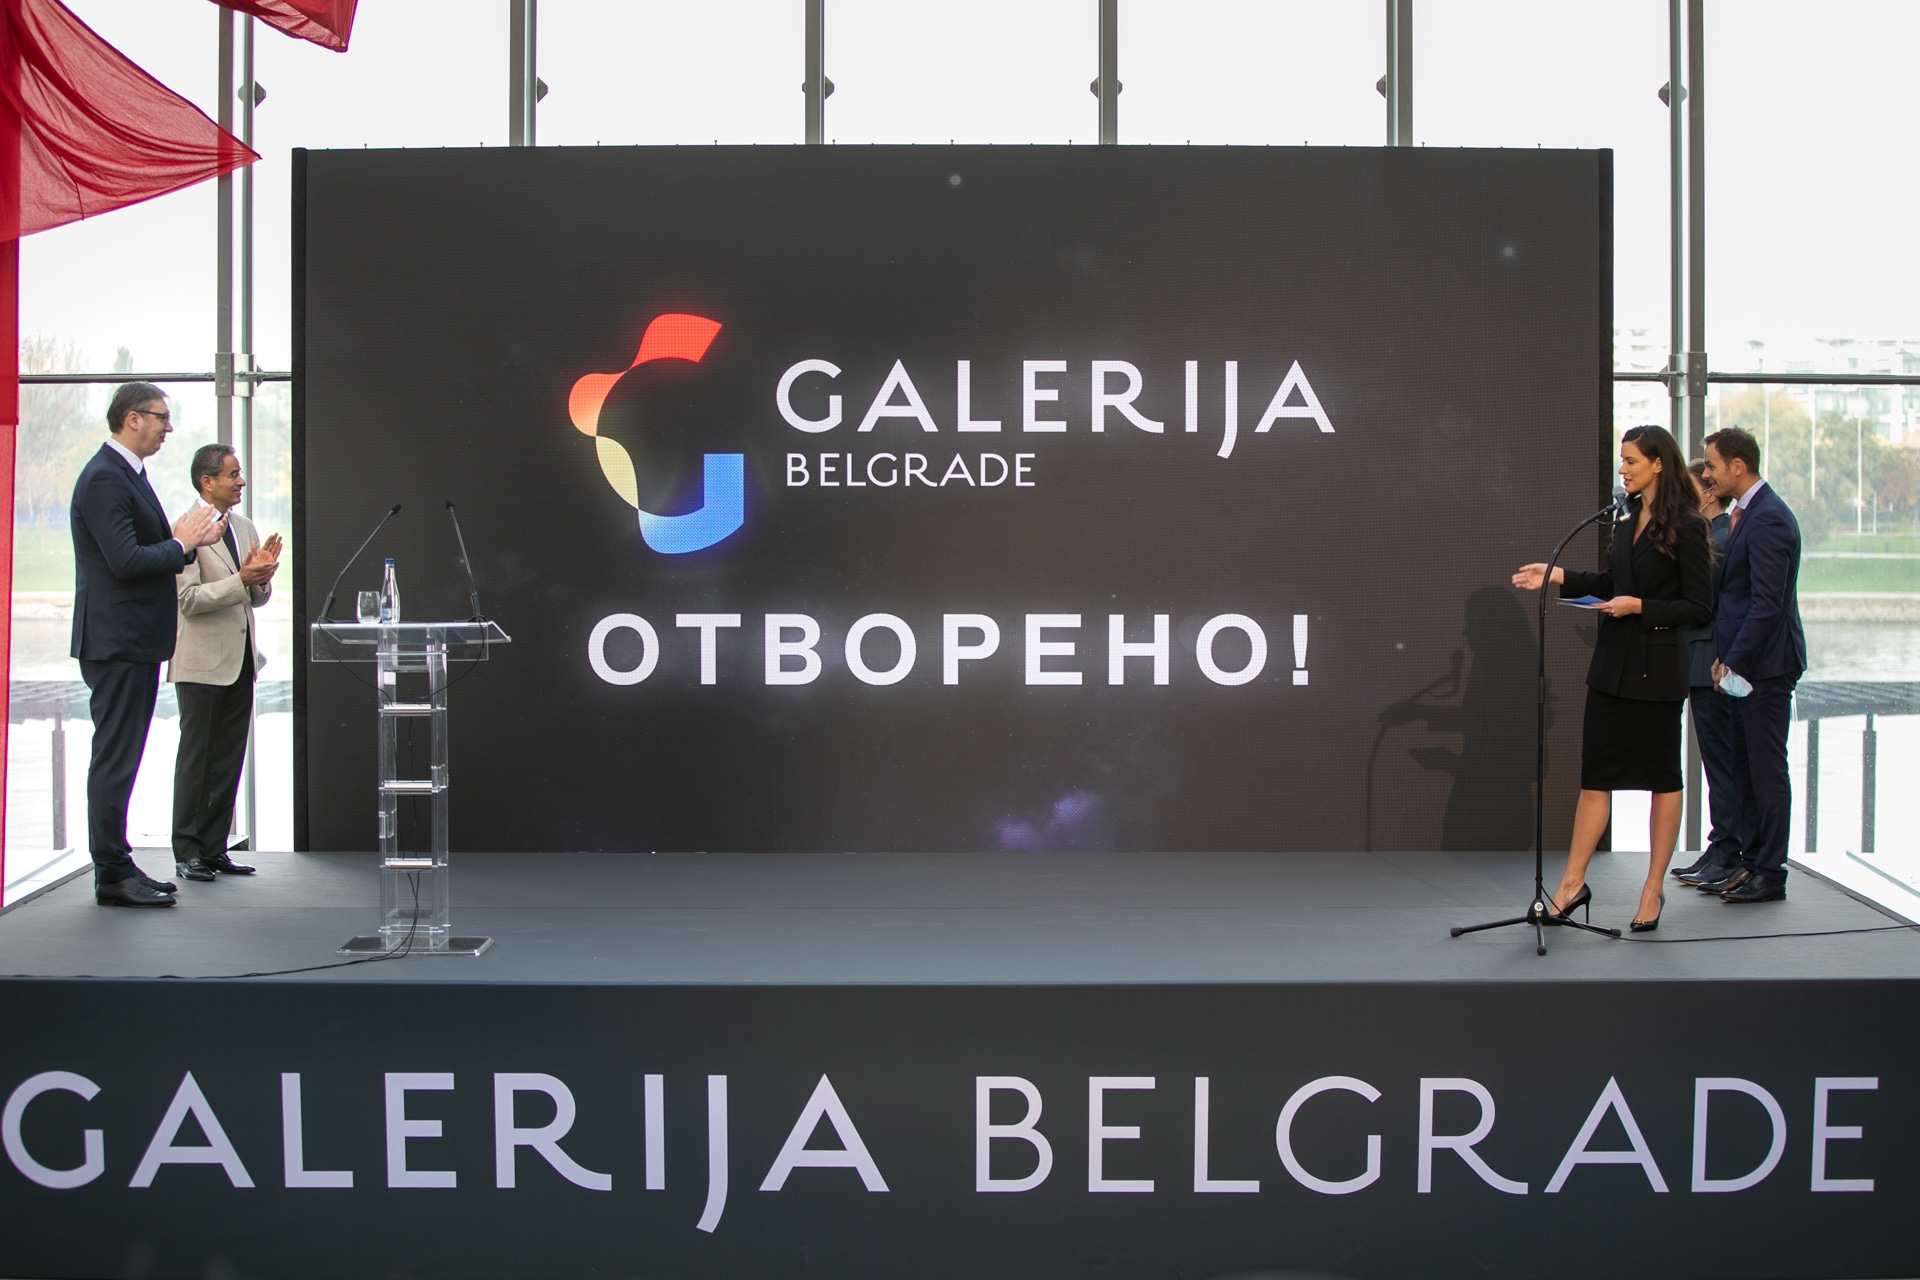 Galerija Belgrade, the biggest shopping mall in the region, has opened its doors